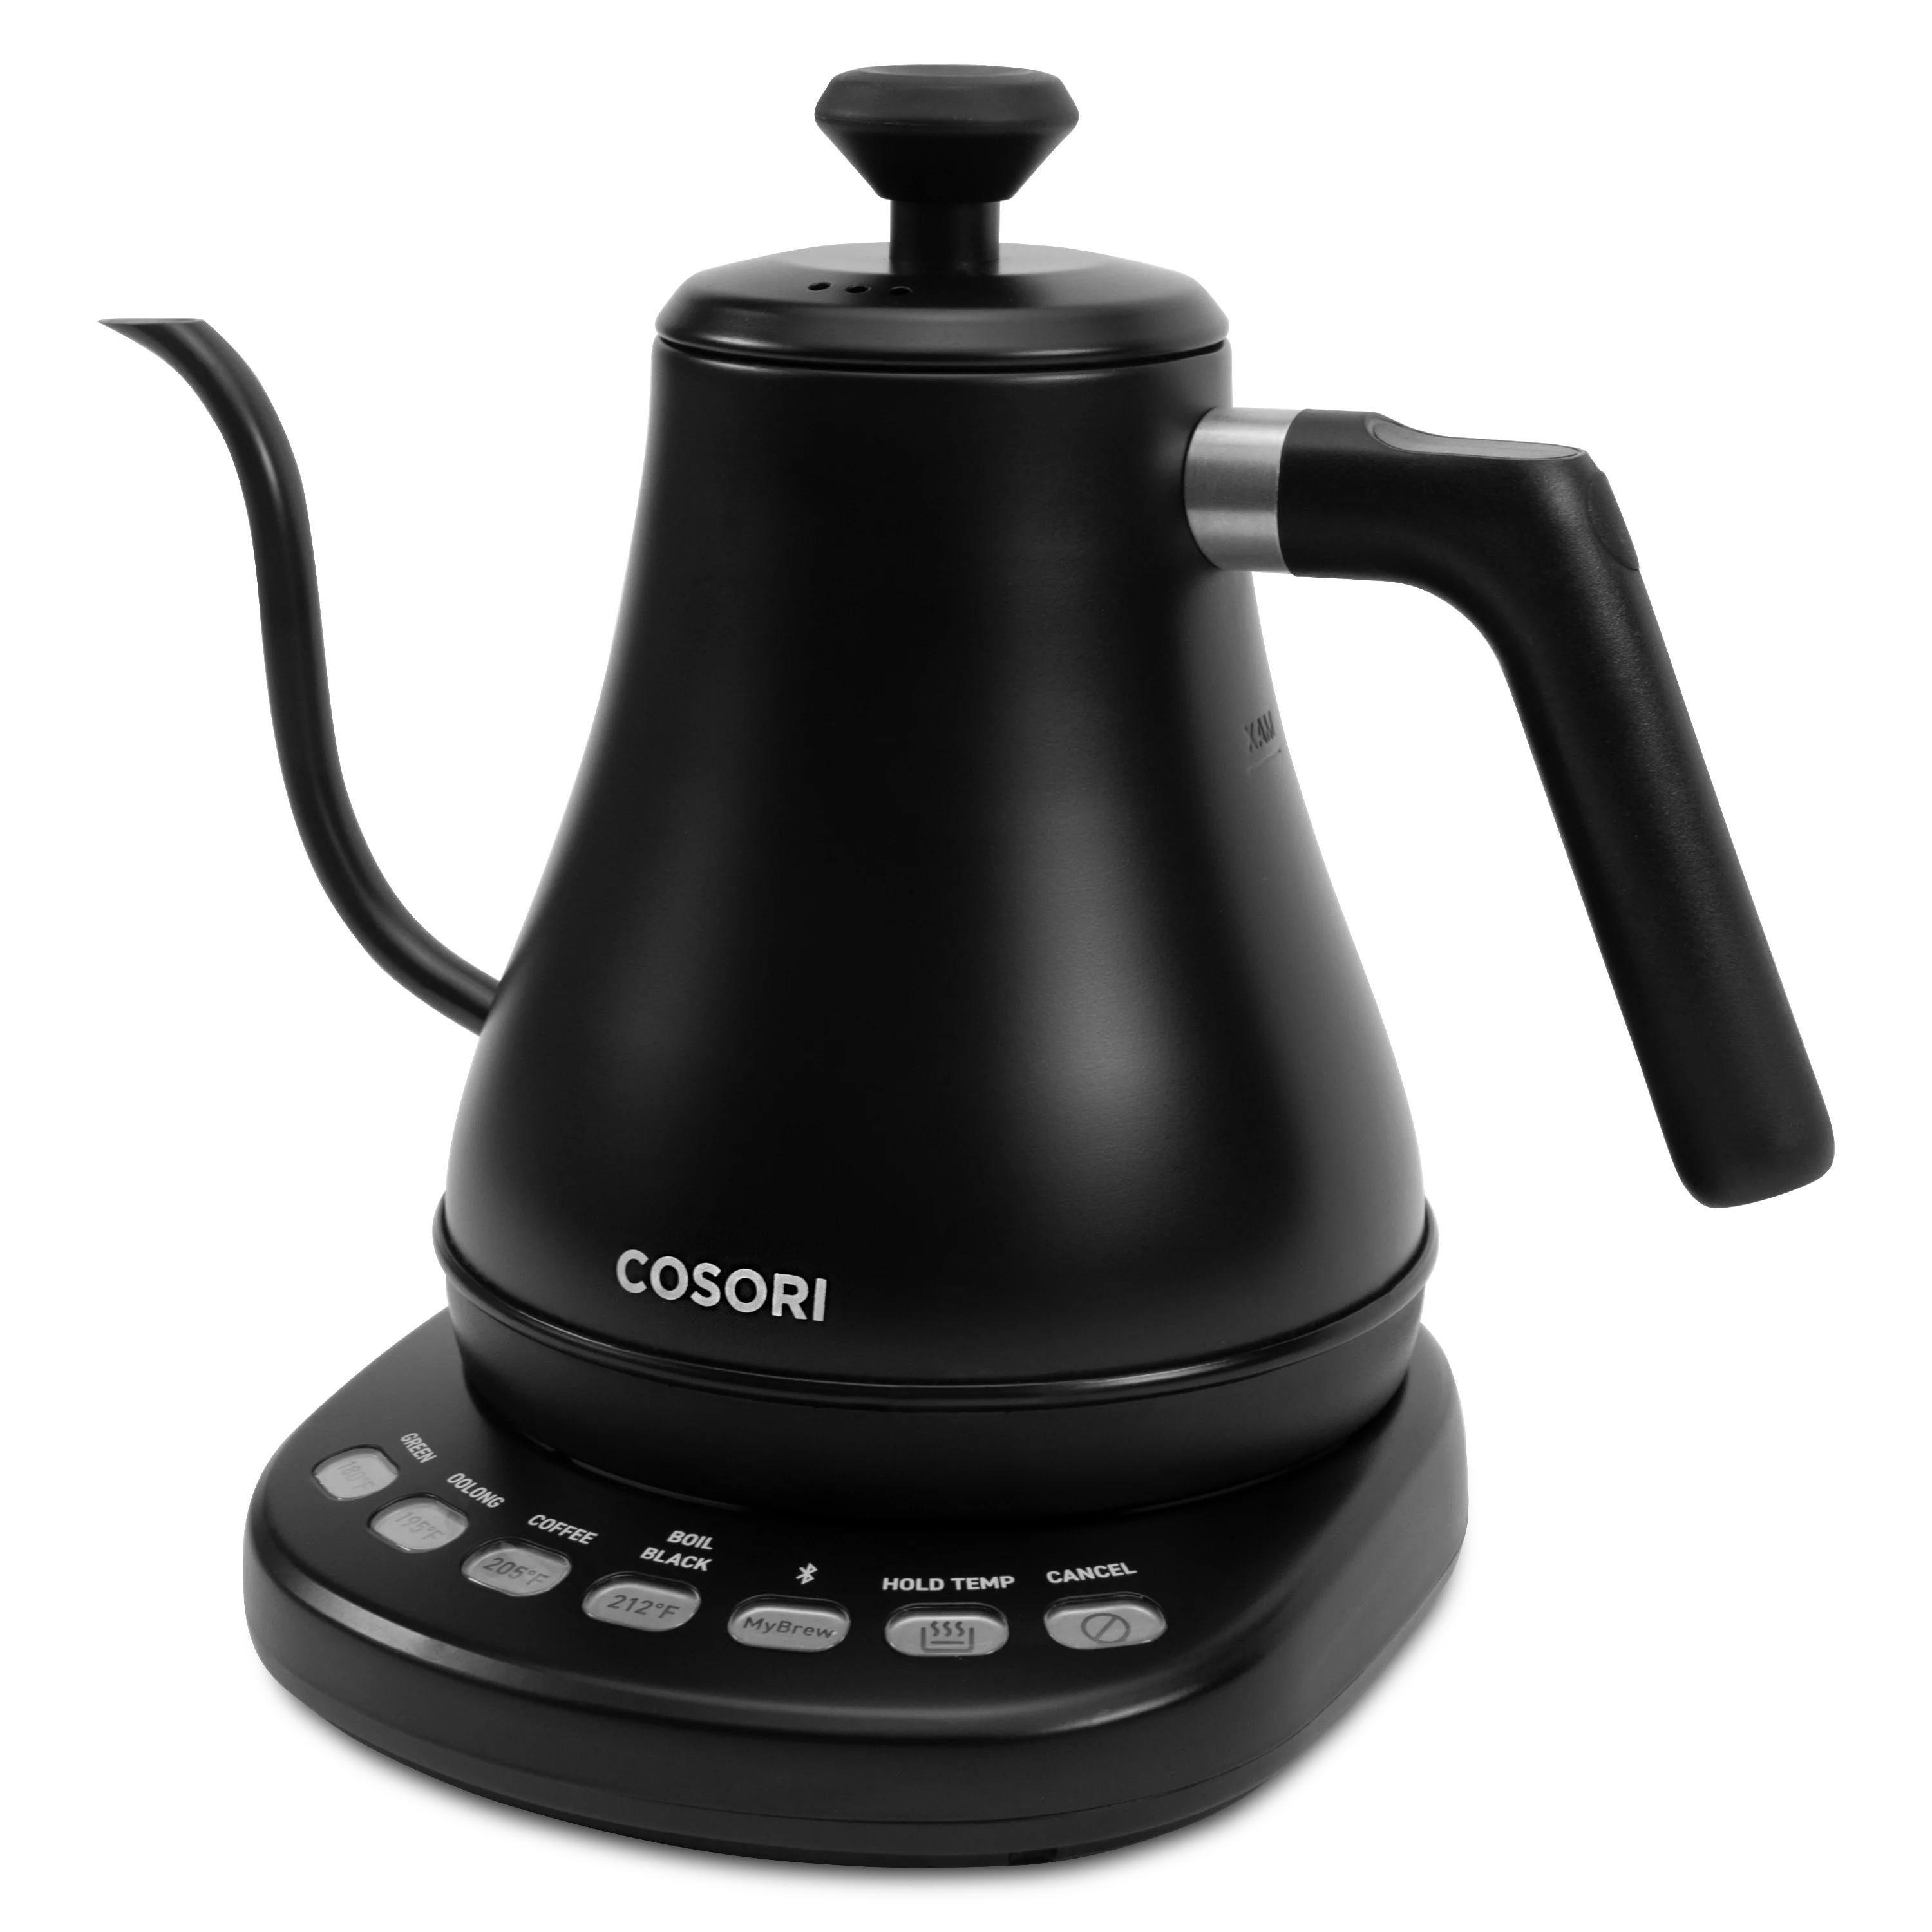 Cosori Original Electric Gooseneck Kettle Review: Great for Tea Lovers